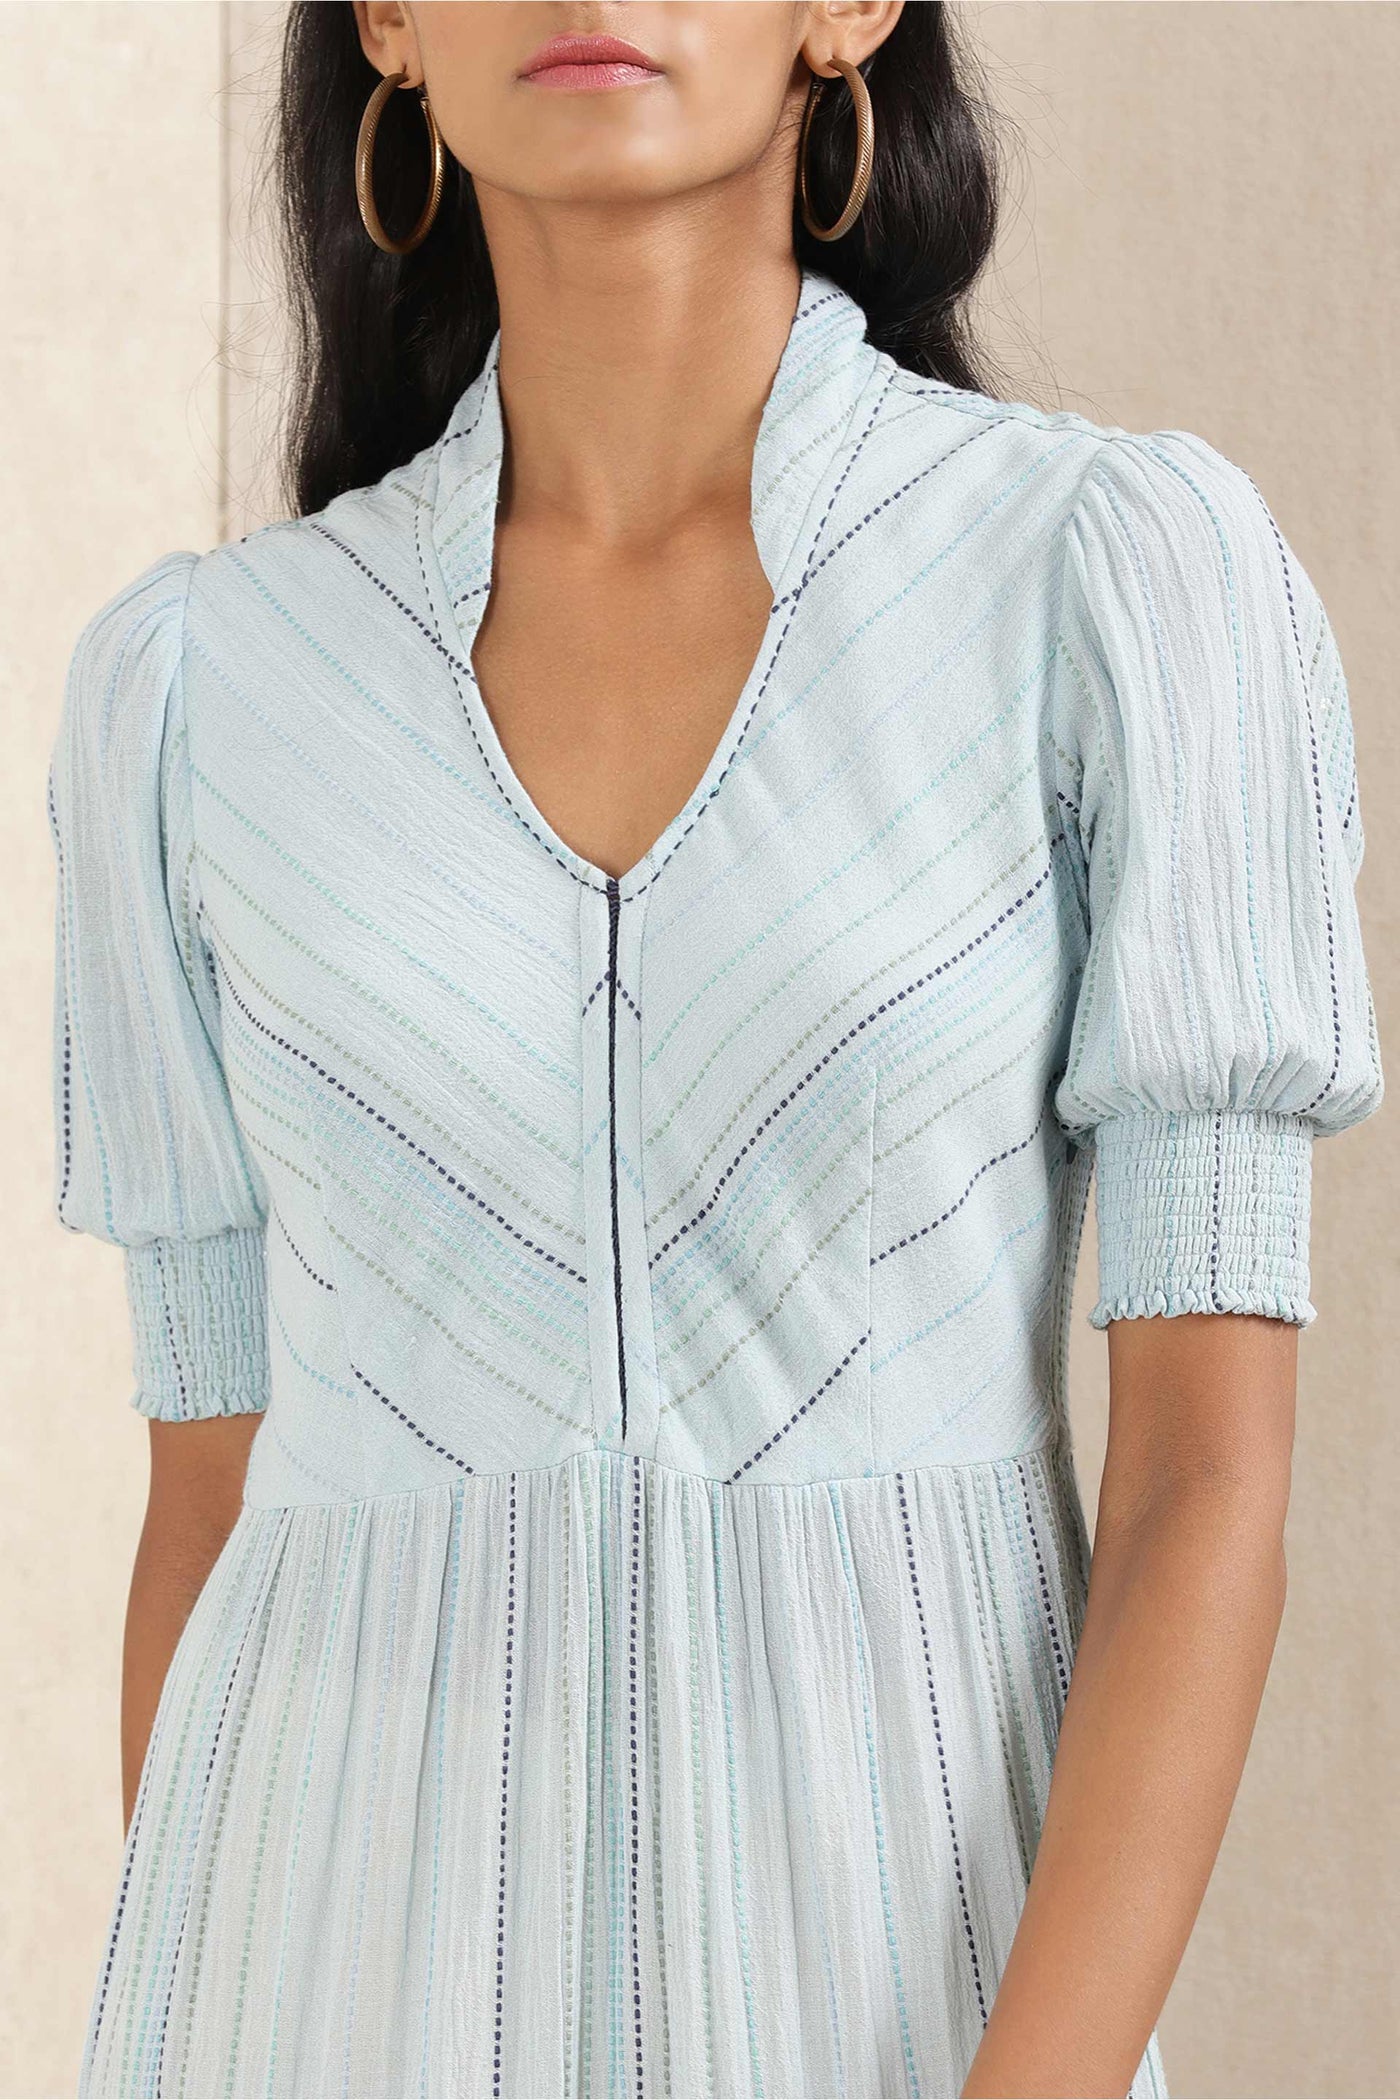 ritu kumar Blue Stripe Cotton Dress online shopping melange singapore indian designer wear